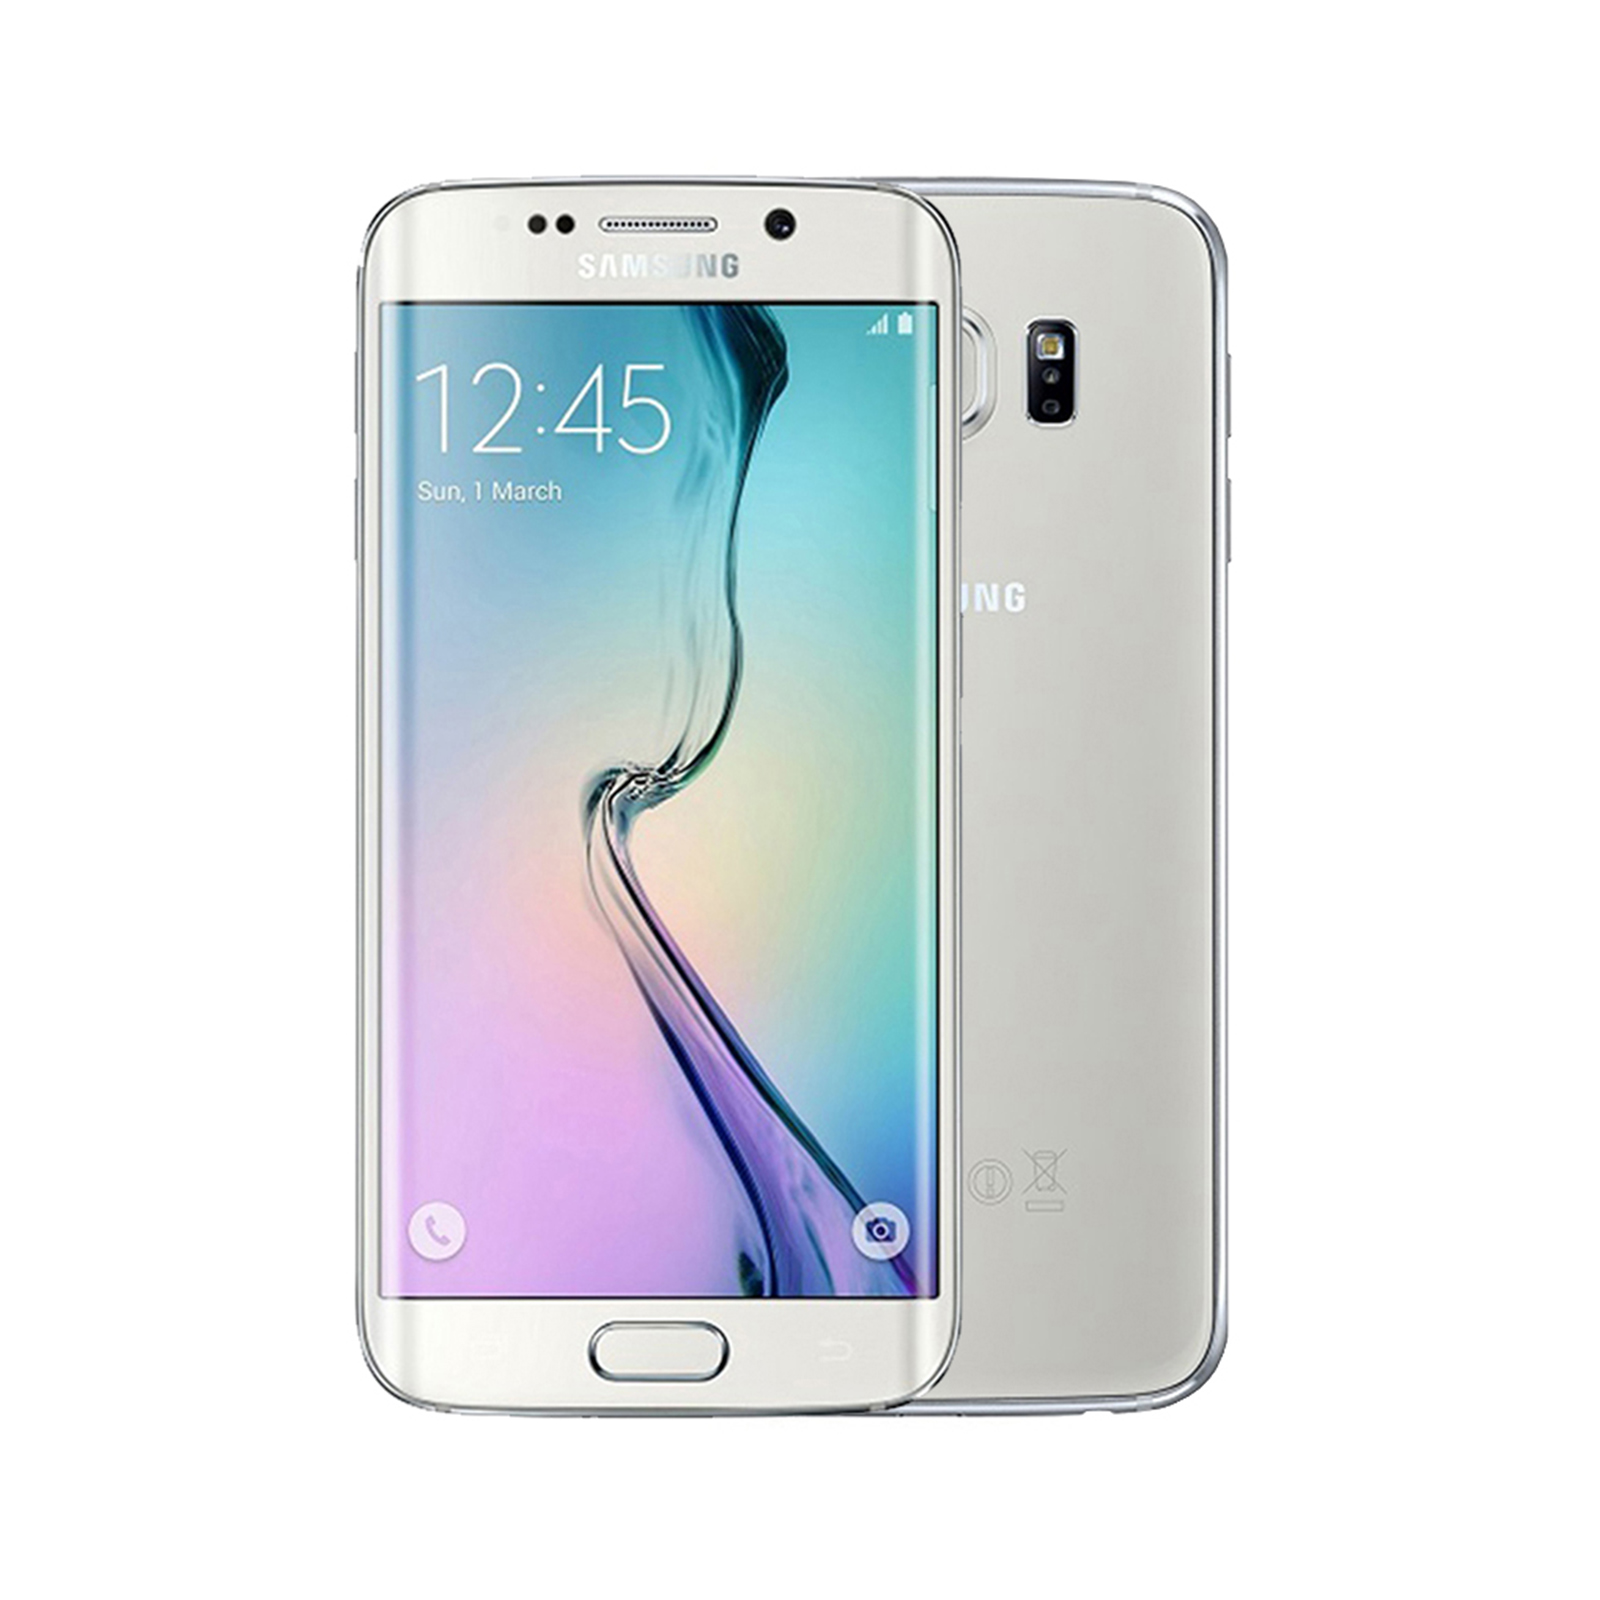 Samsung Galaxy S6 edge [32GB] [White] [Very Good]